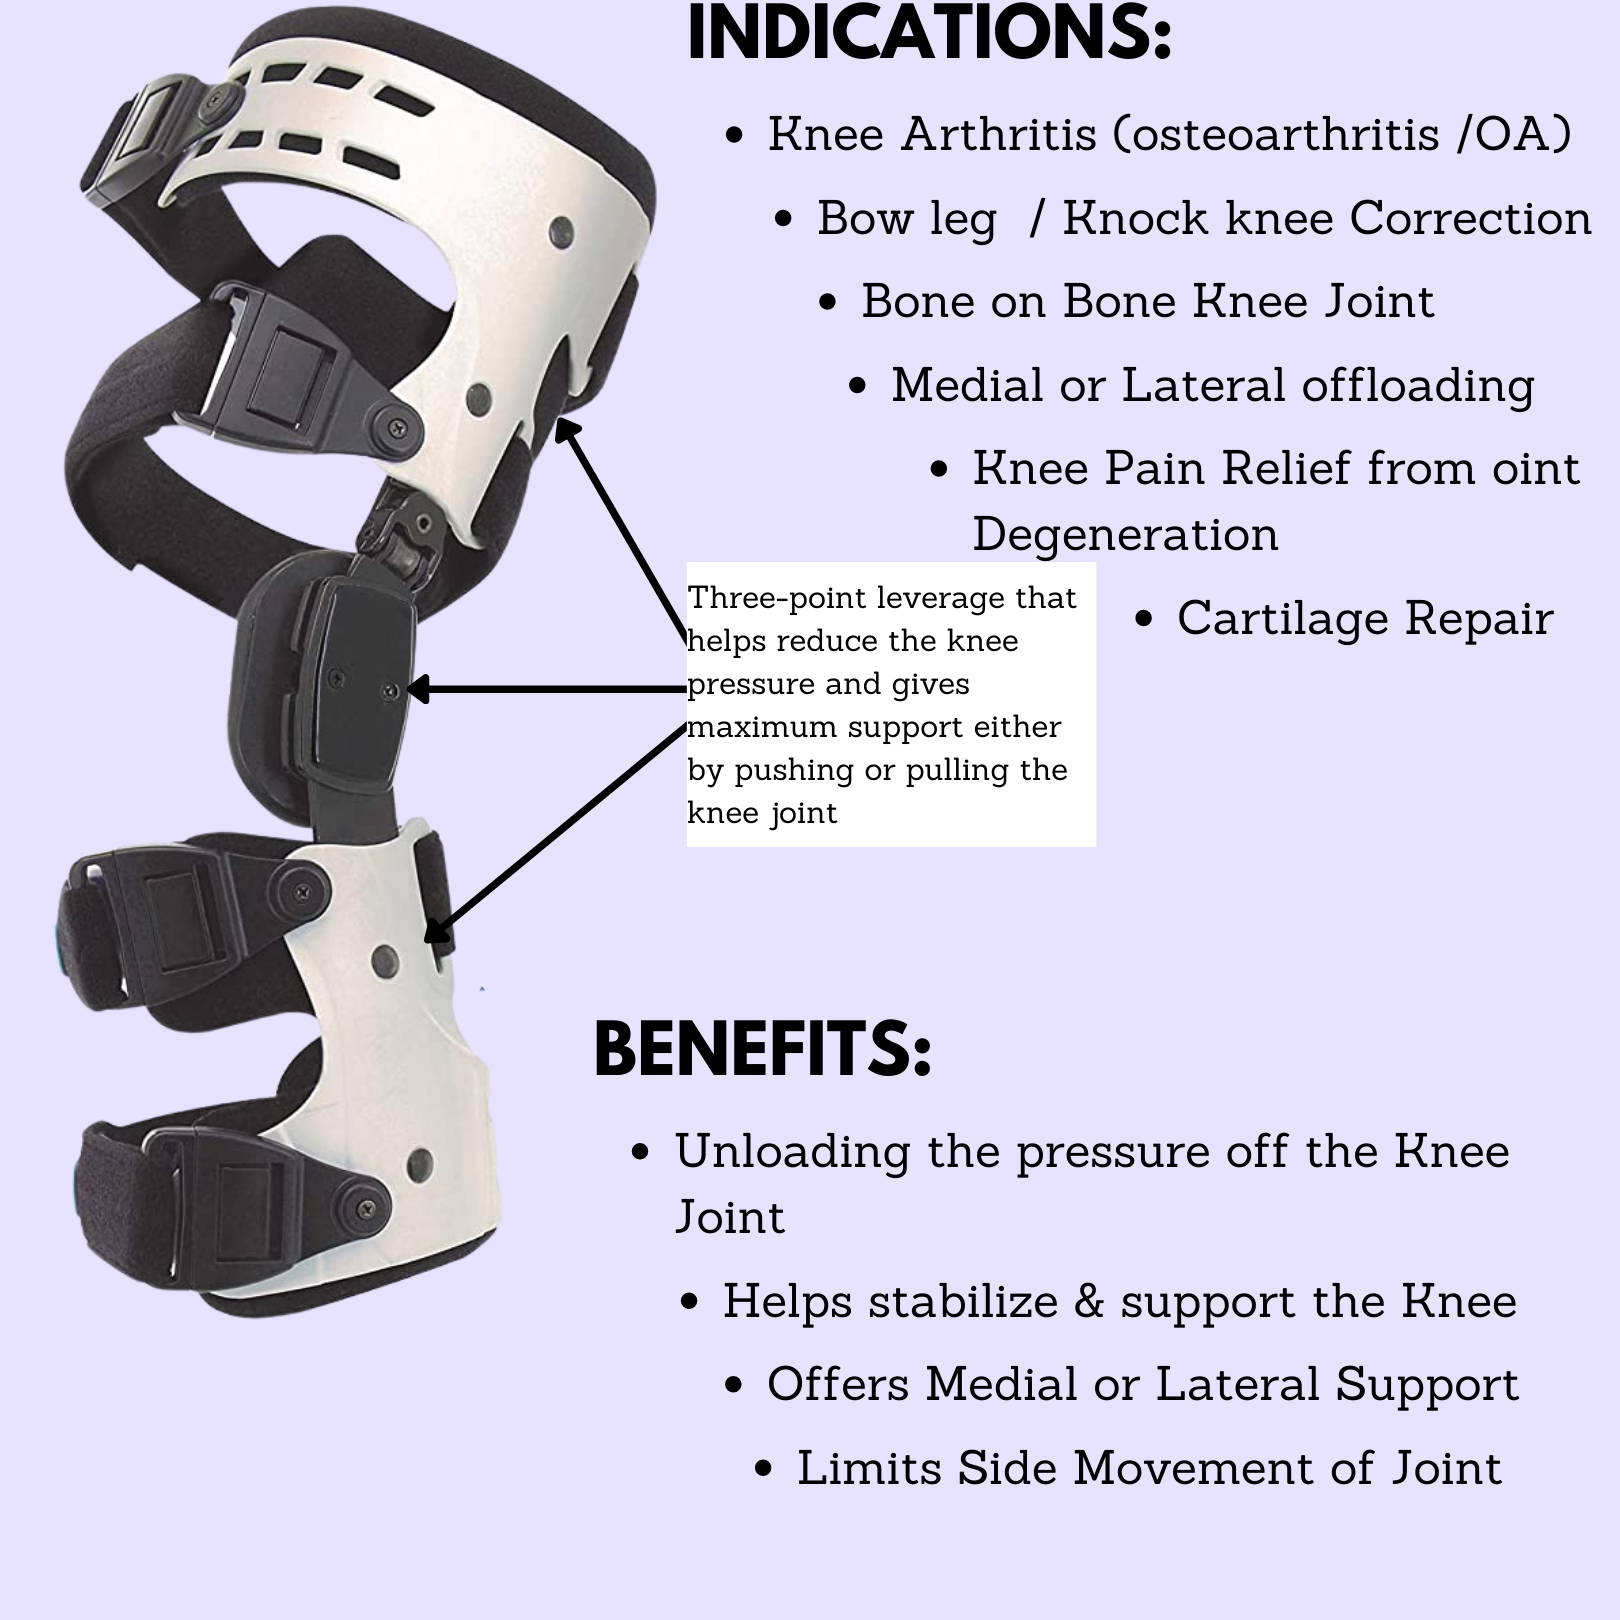 comfyorthopedic oa unloader knee brace includes adjustment tools, fixed starps, buckle, suspension sleeve and 13 hinge stops 